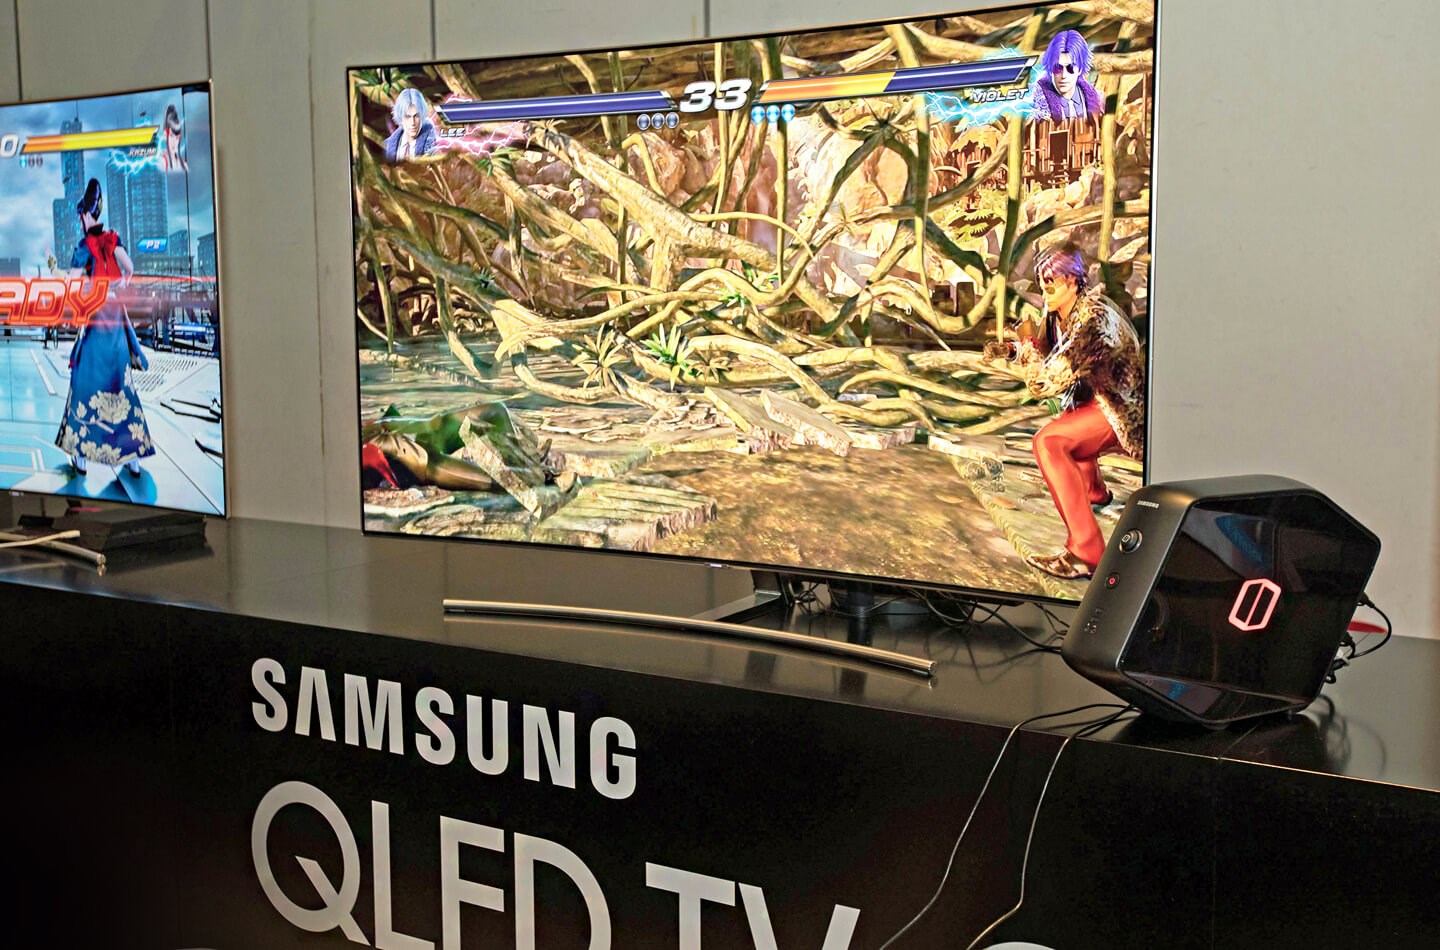 Samsung QLED televizyonlar oyuna odaklanıyor